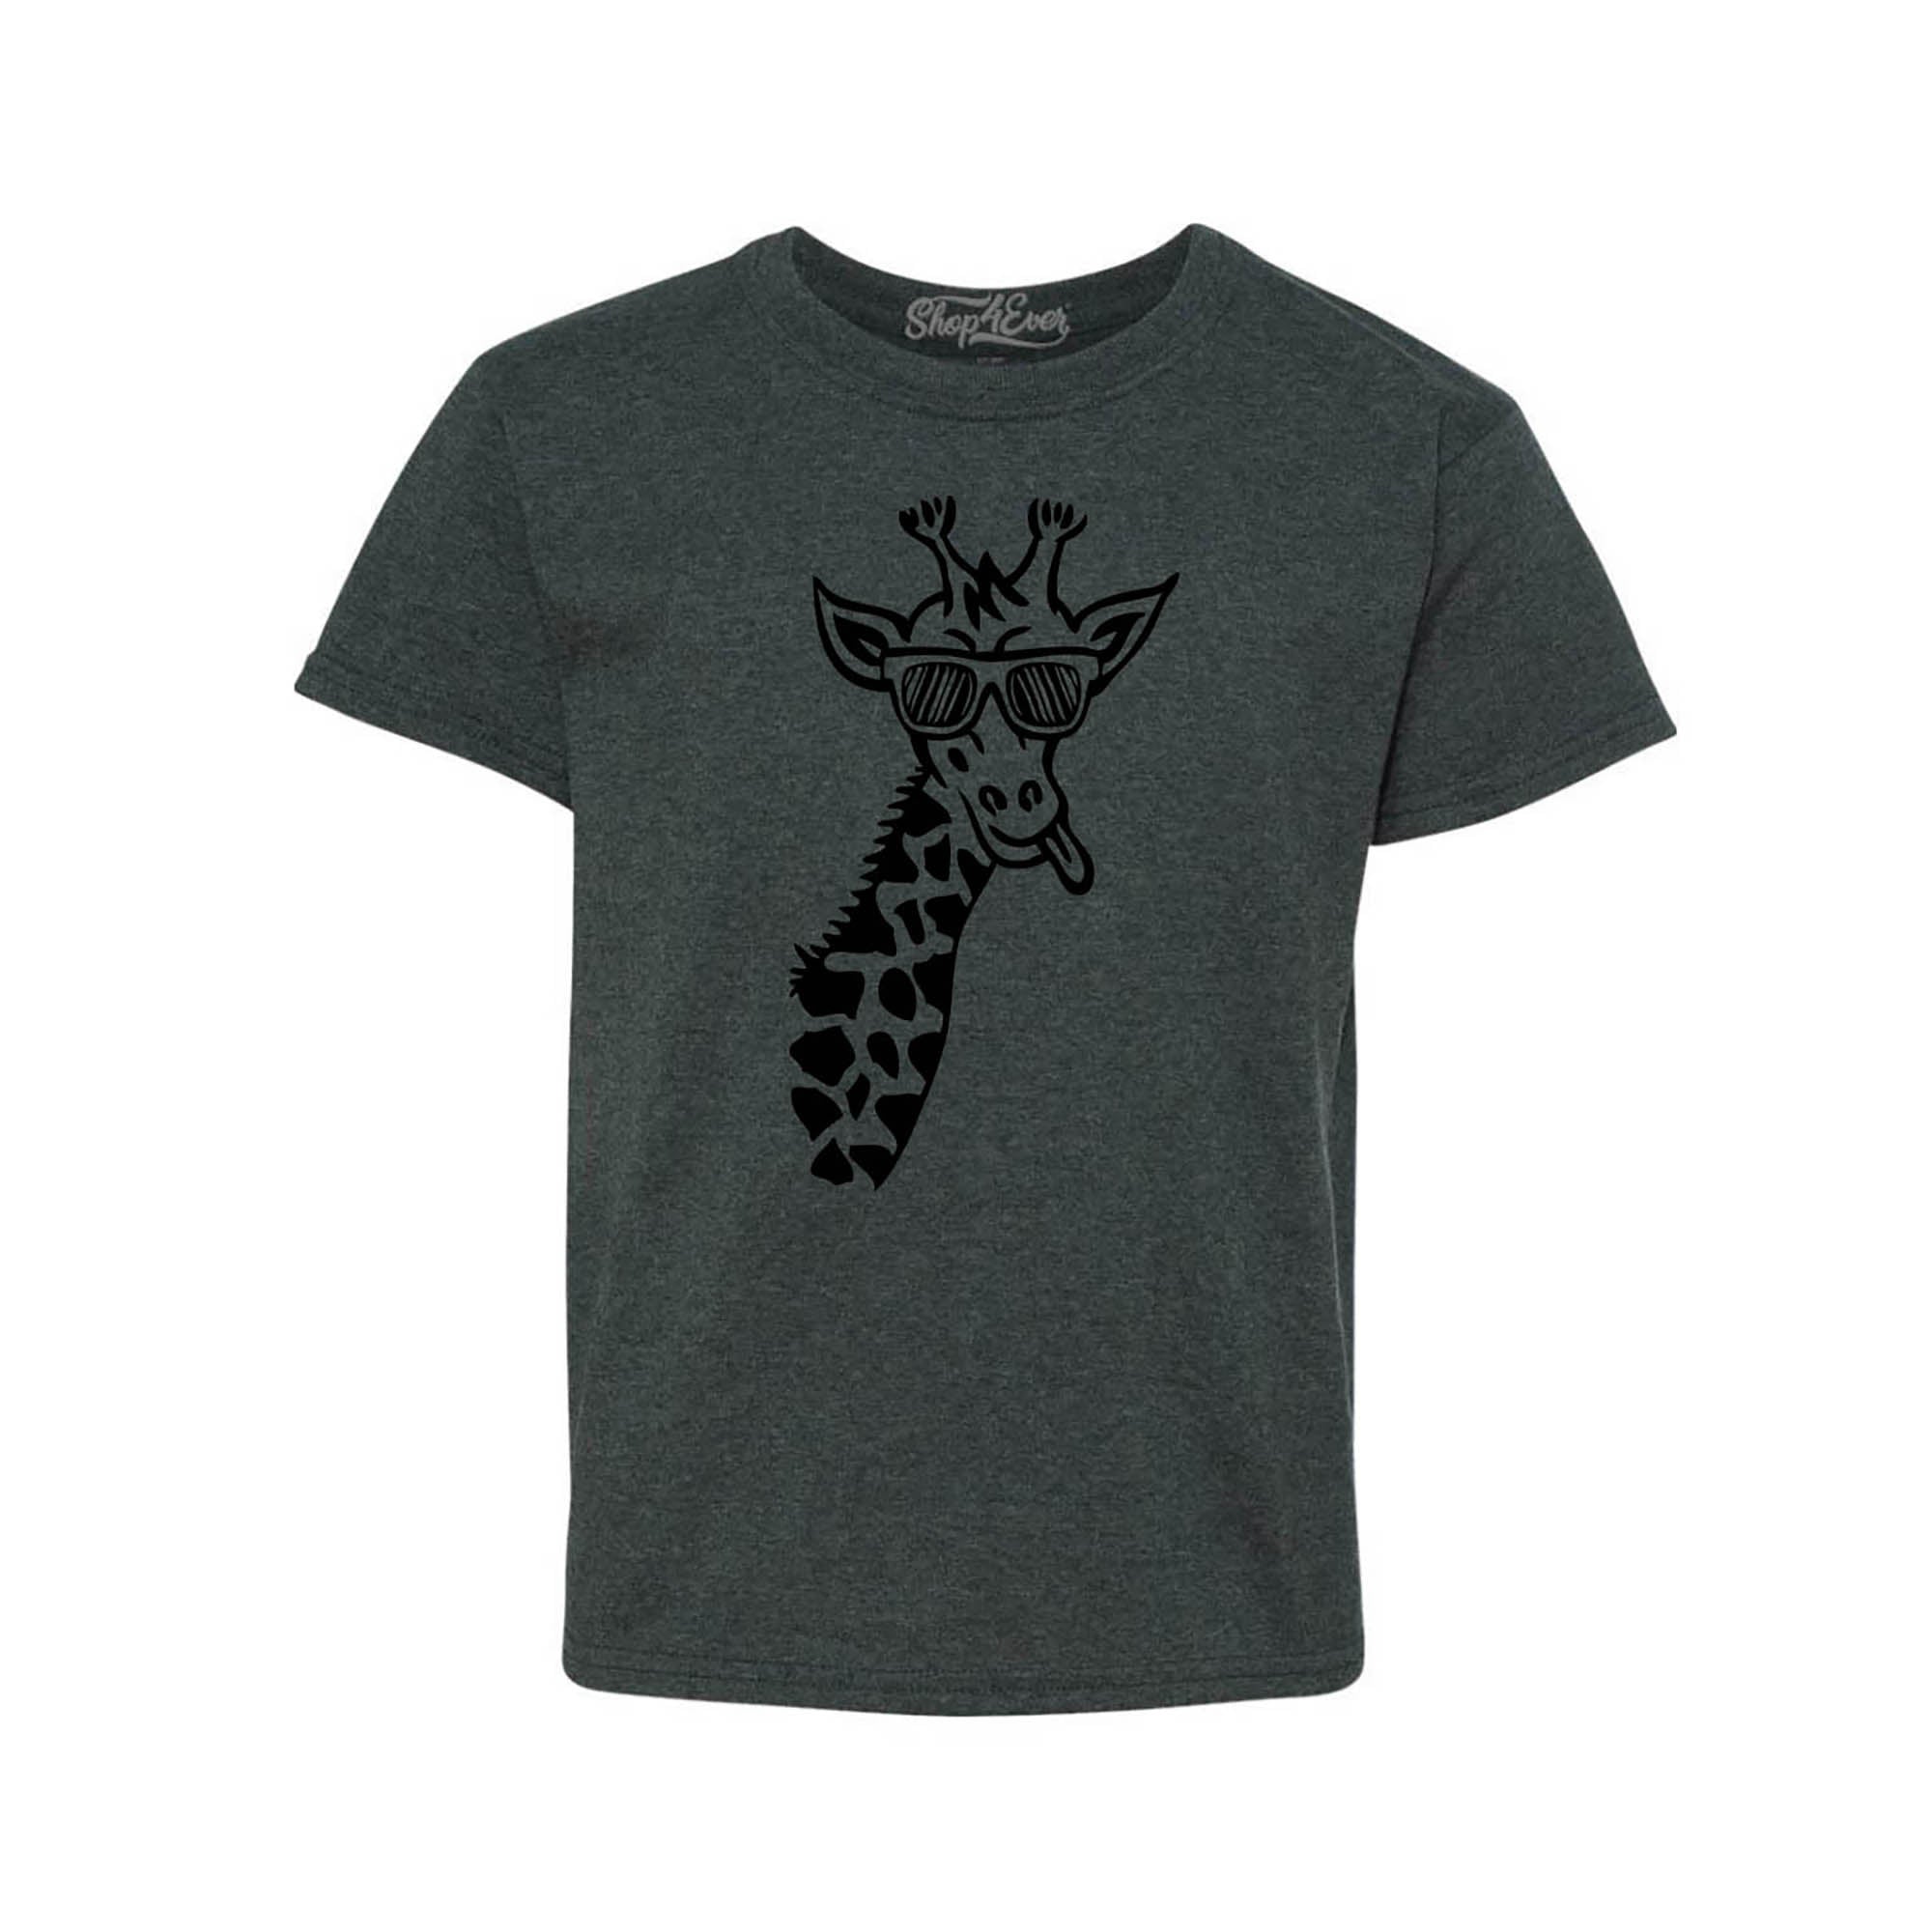 Cool Giraffe Cute Animal Youth's T-Shirt